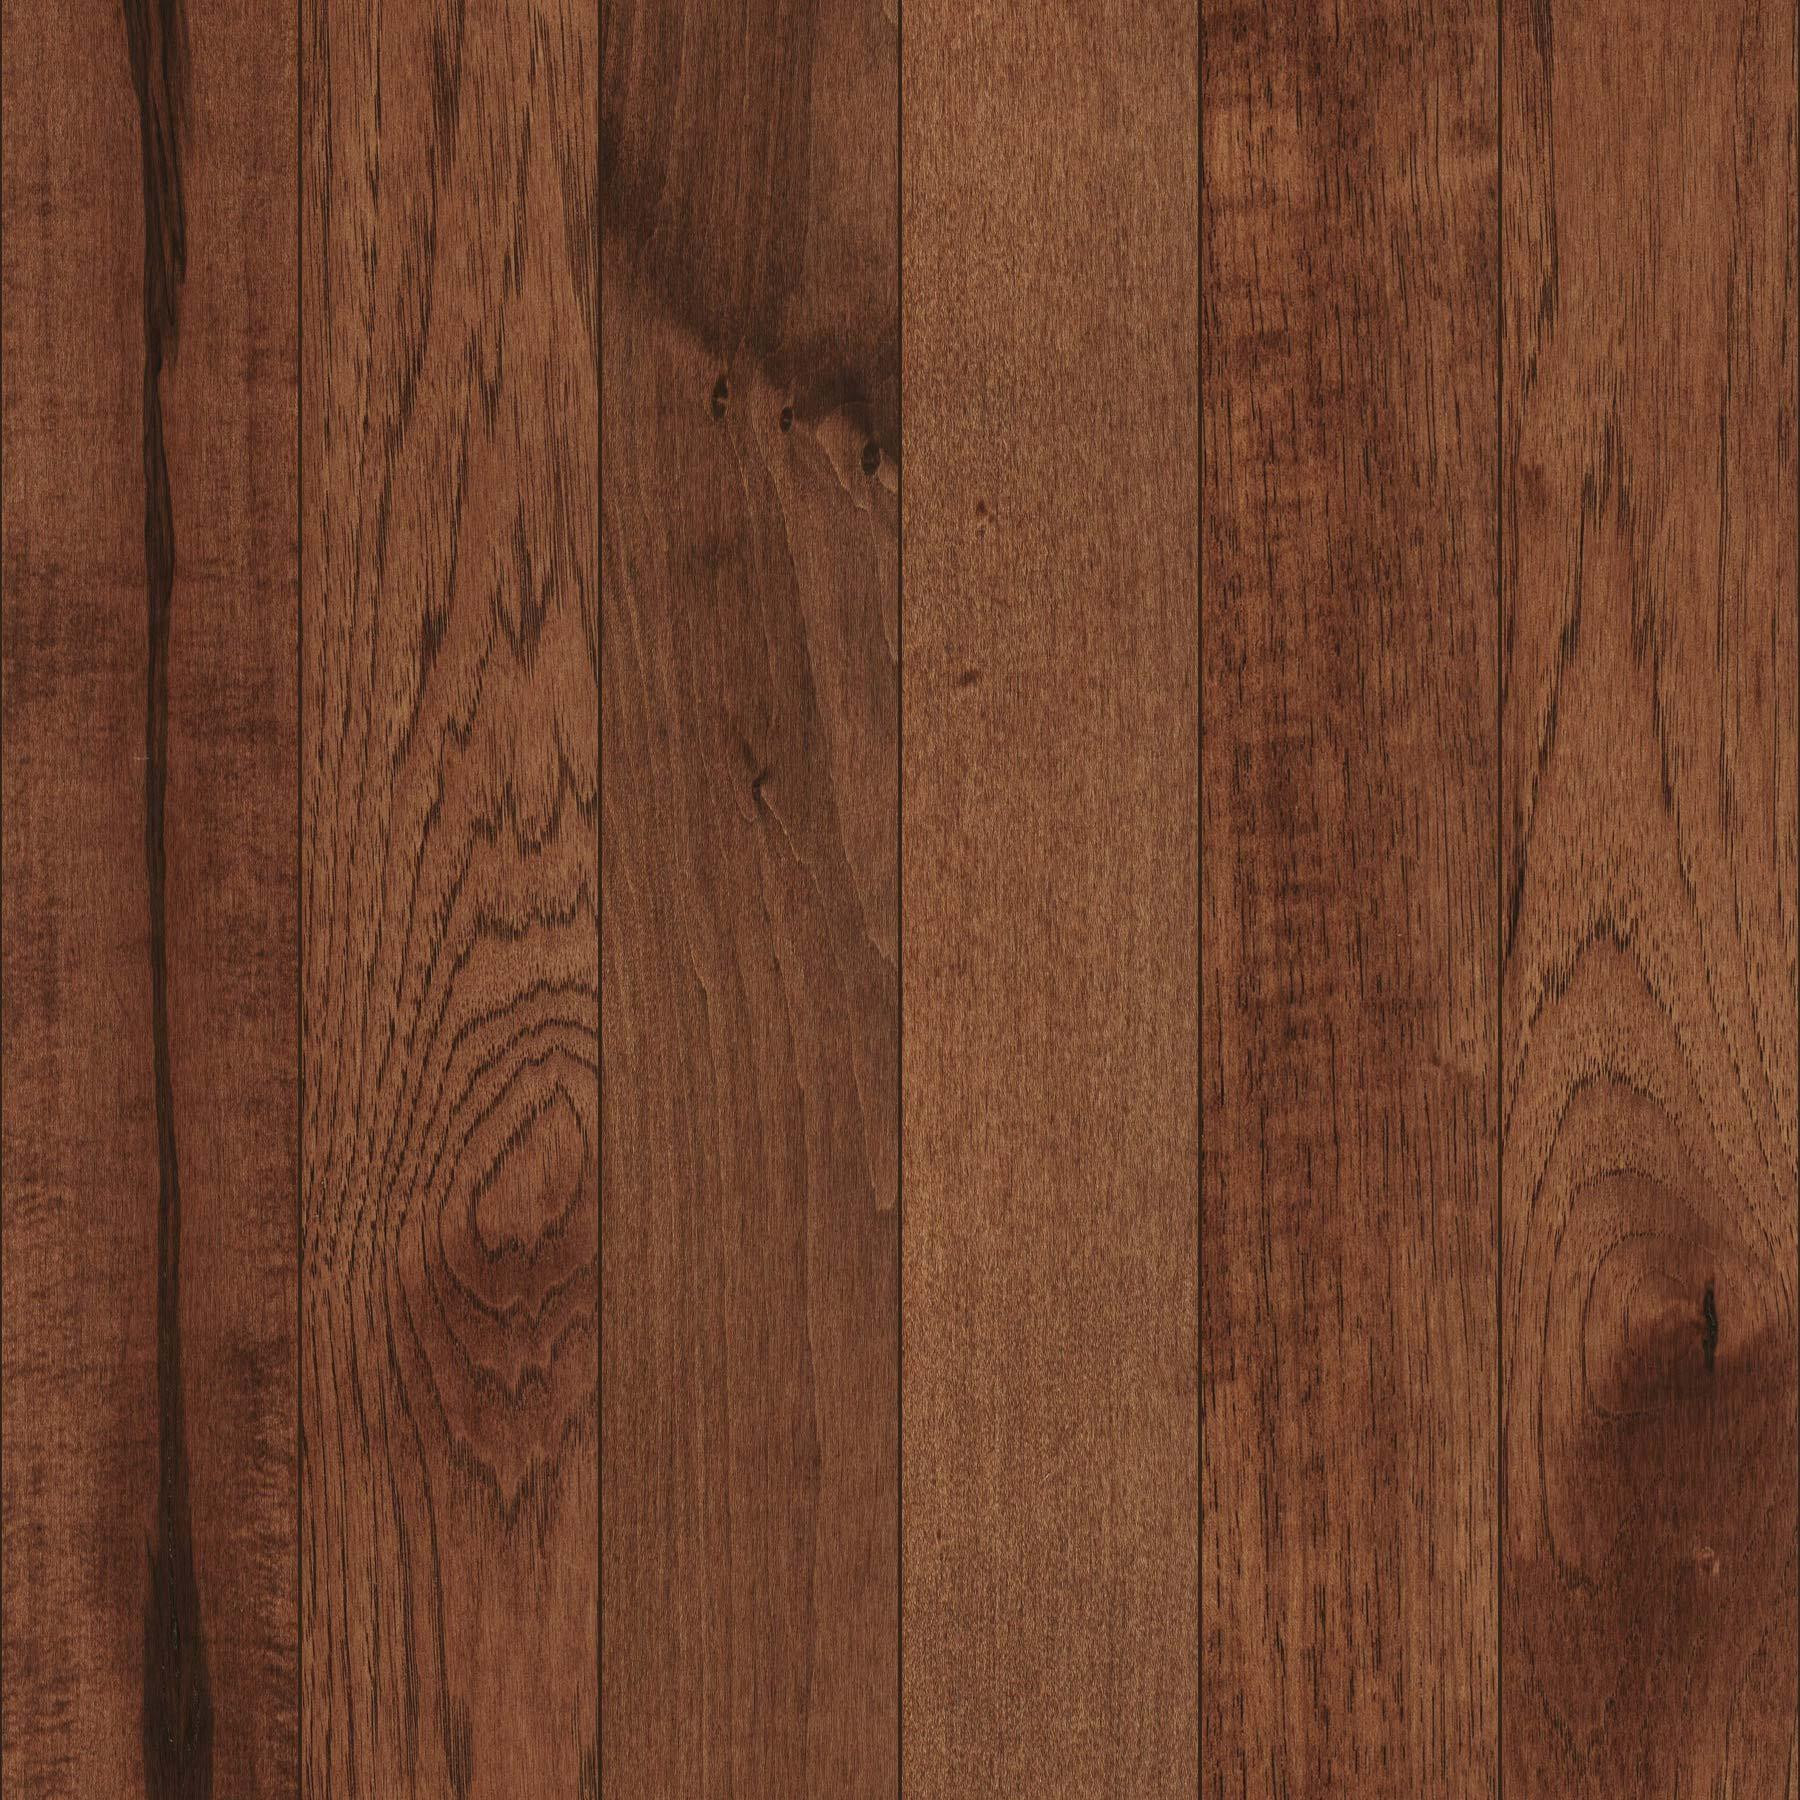 26 Unique Maple Hardwood Flooring for Sale 2024 free download maple hardwood flooring for sale of kingsmill harvest maple 3 wide 3 4 solid hardwood flooring with regard to harvest maple m uharv3 3 x 60 1800 approved